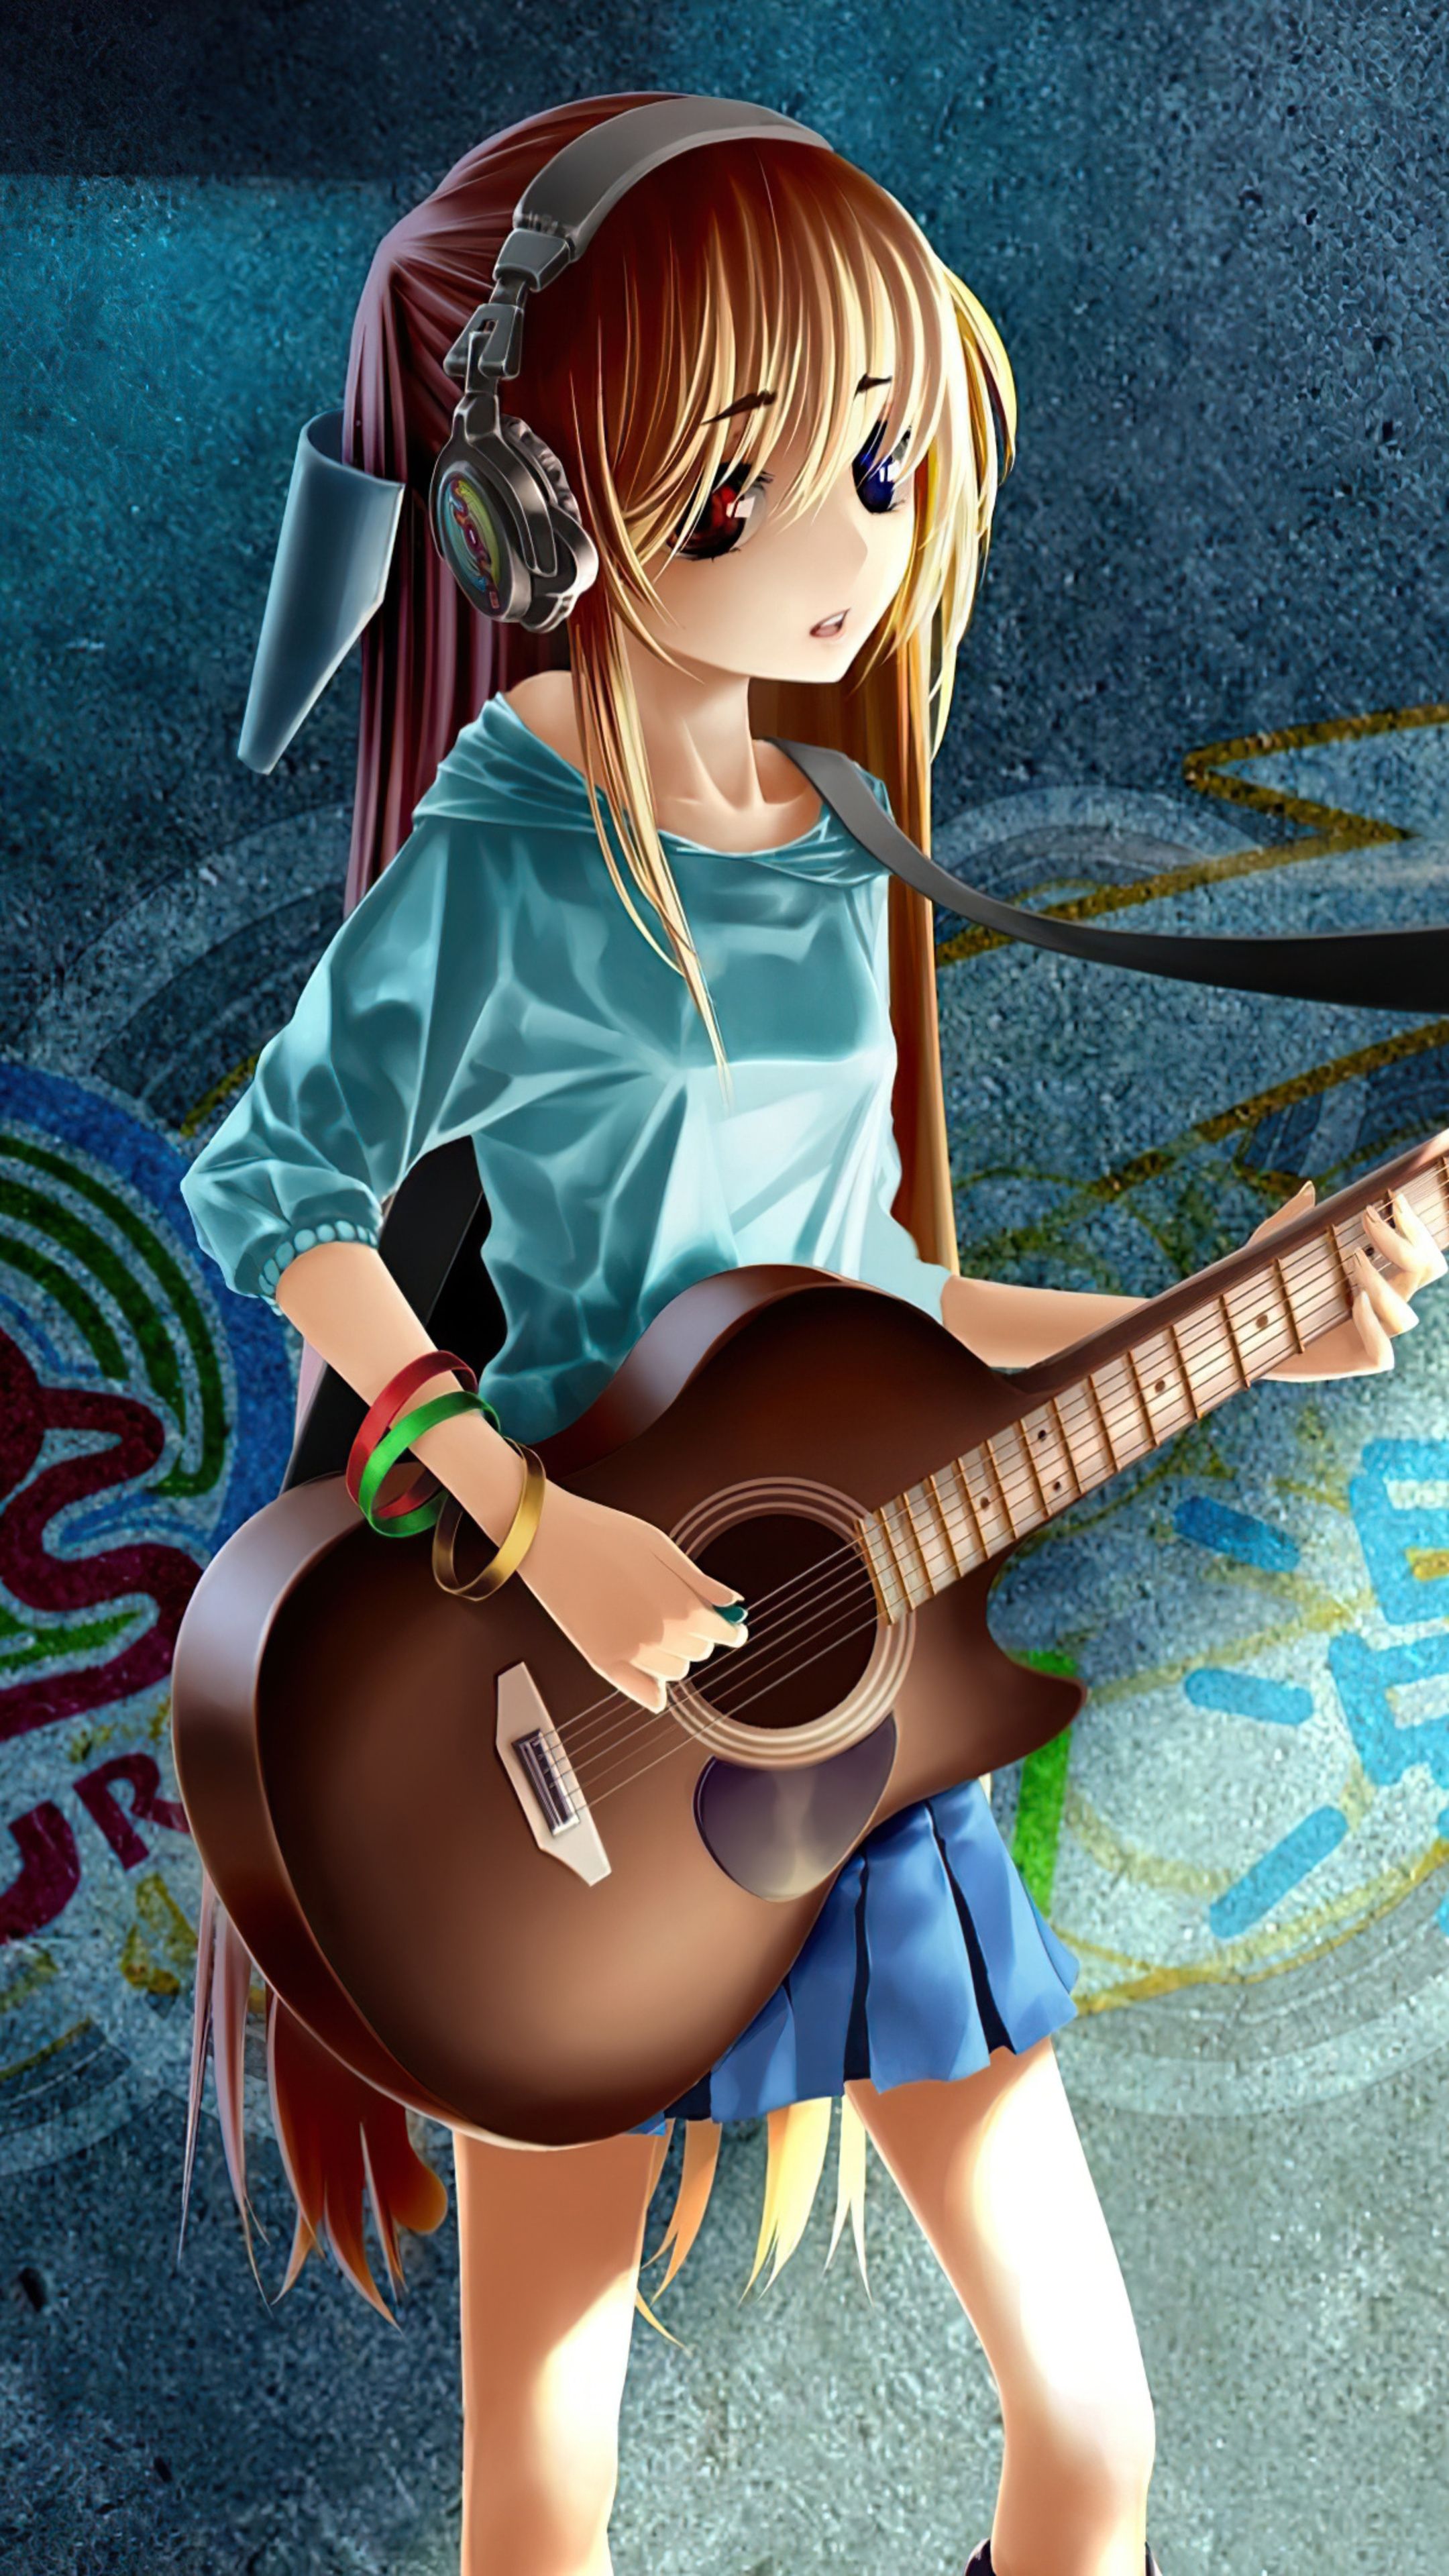 Anime Guitarist Wallpapers